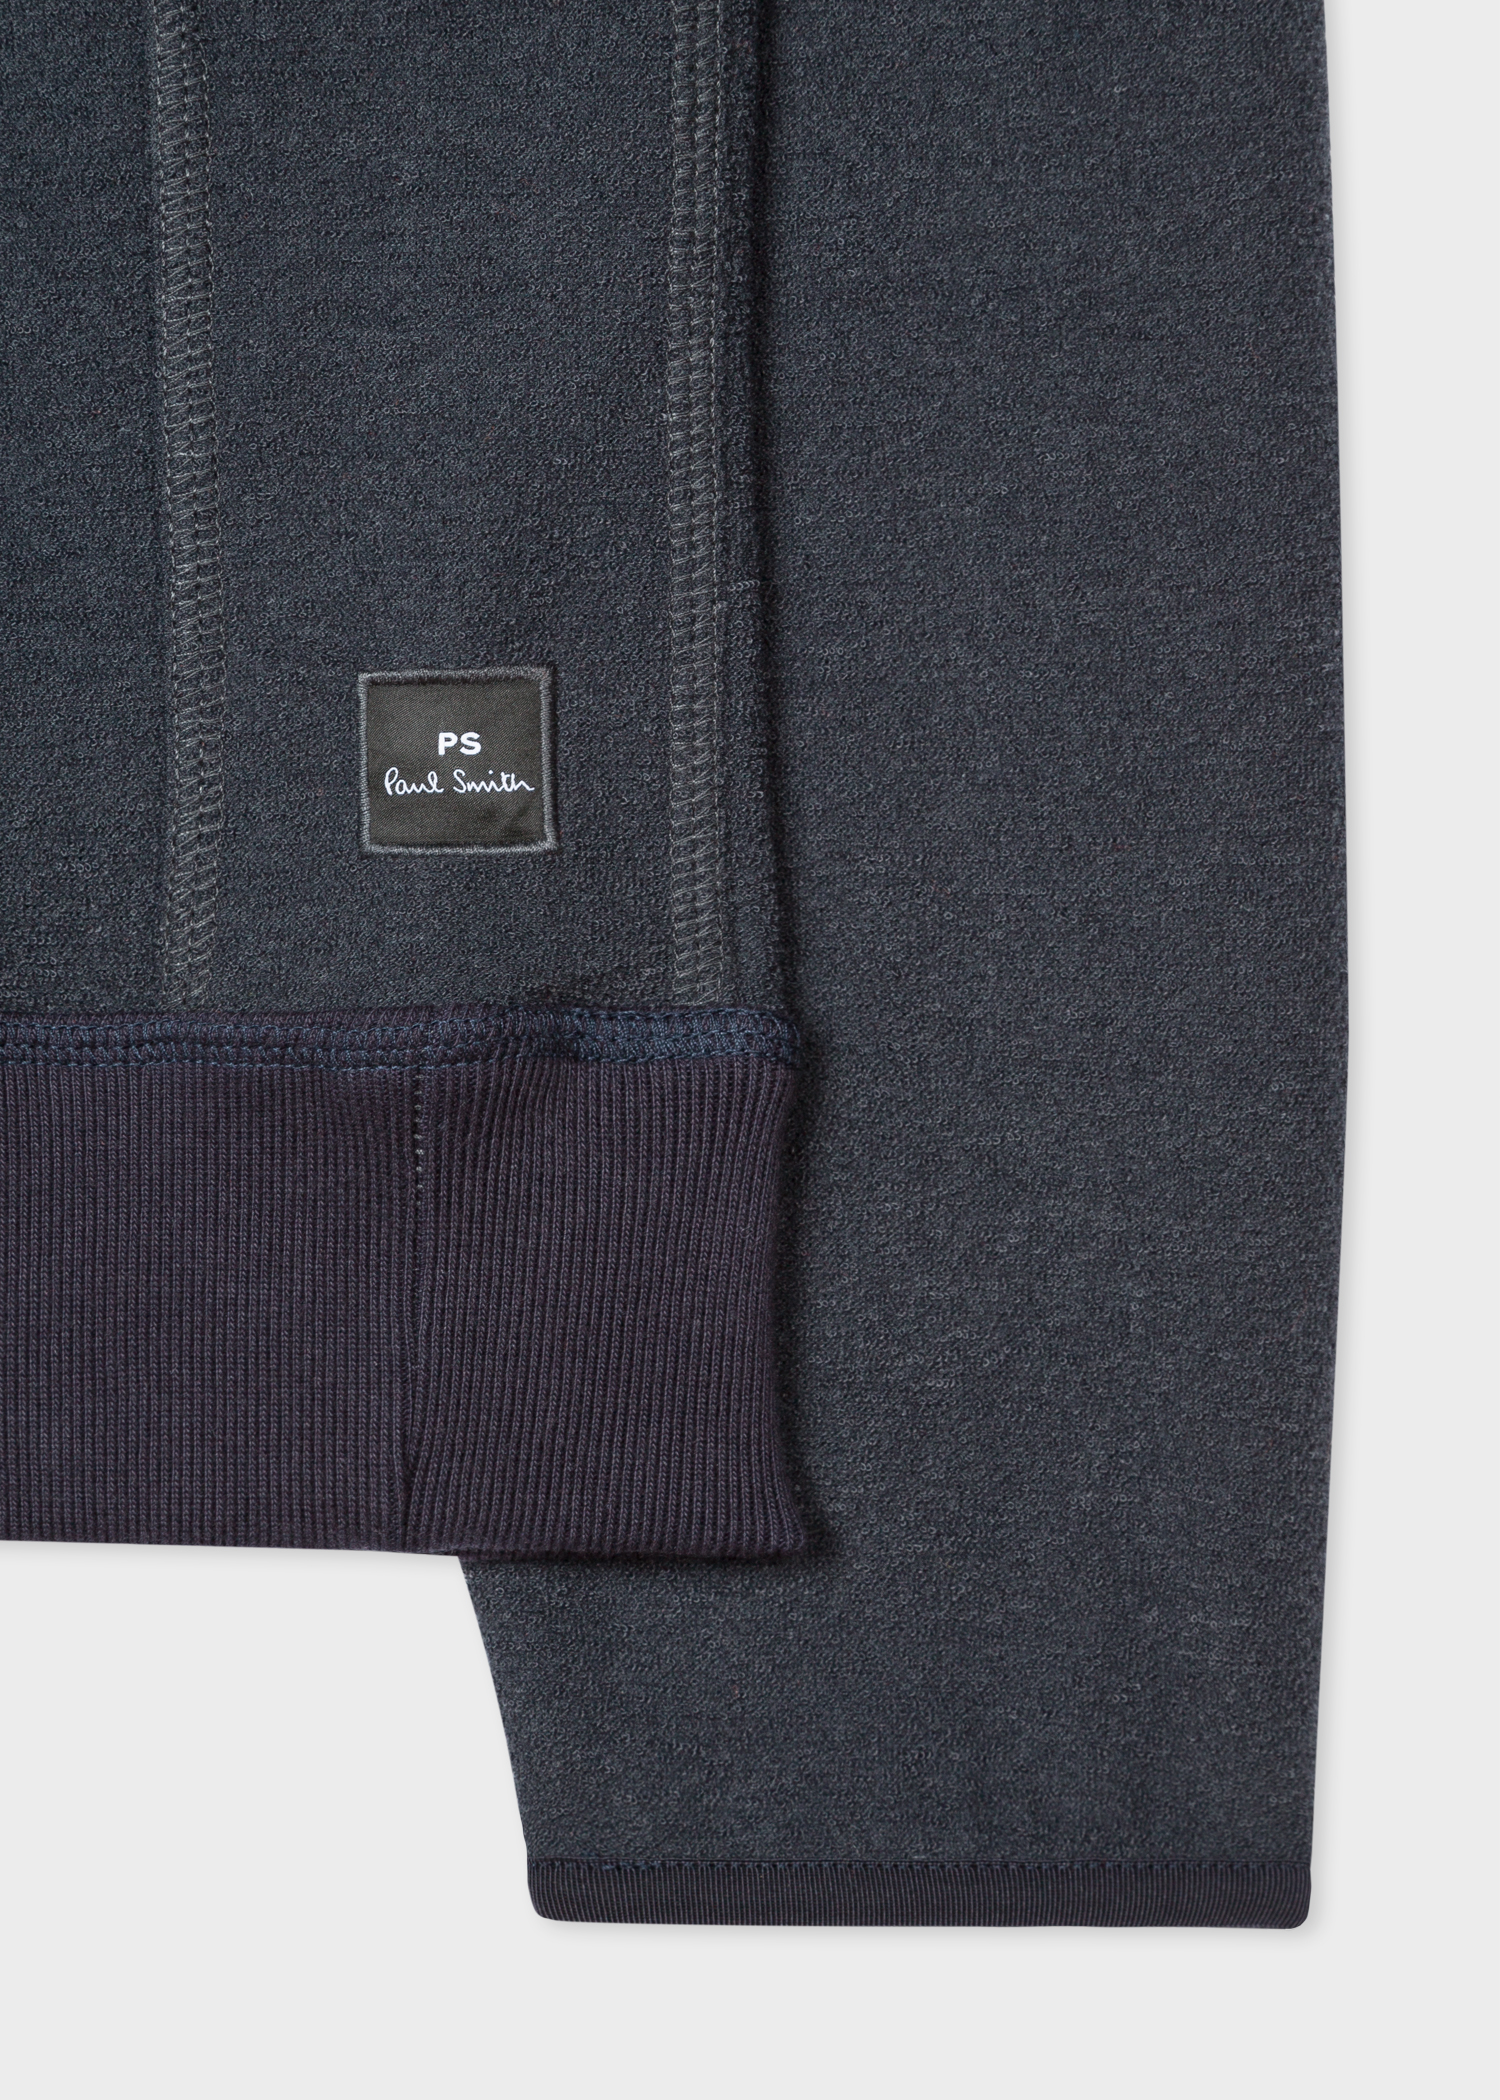 Close-up view - Men's Charcoal Fleece Sweatshirt Paul Smith